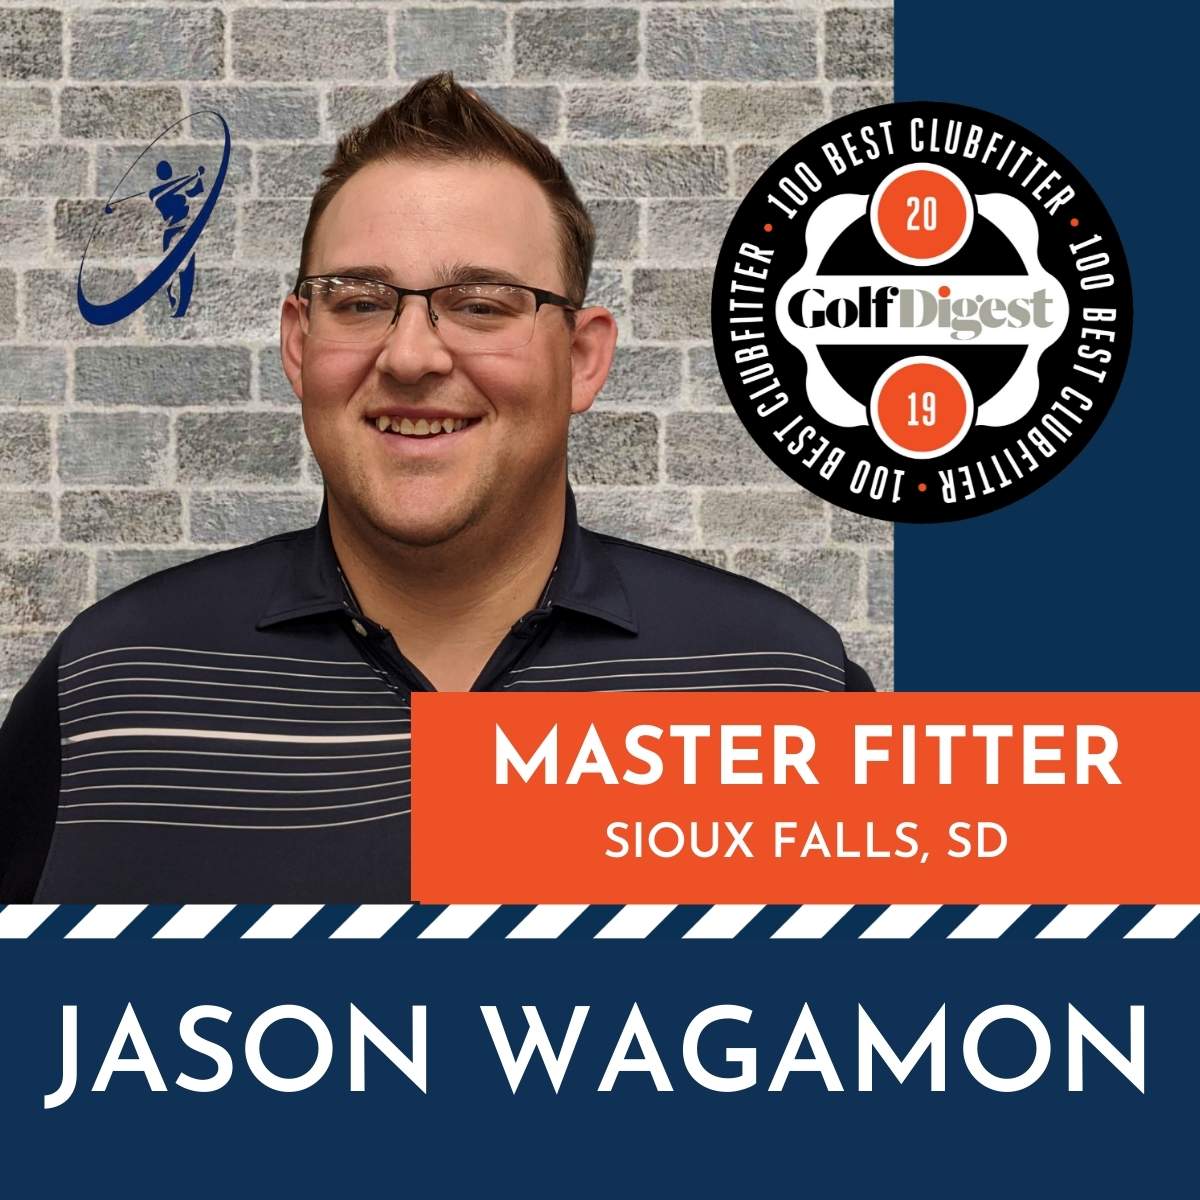 Jason Wagamon